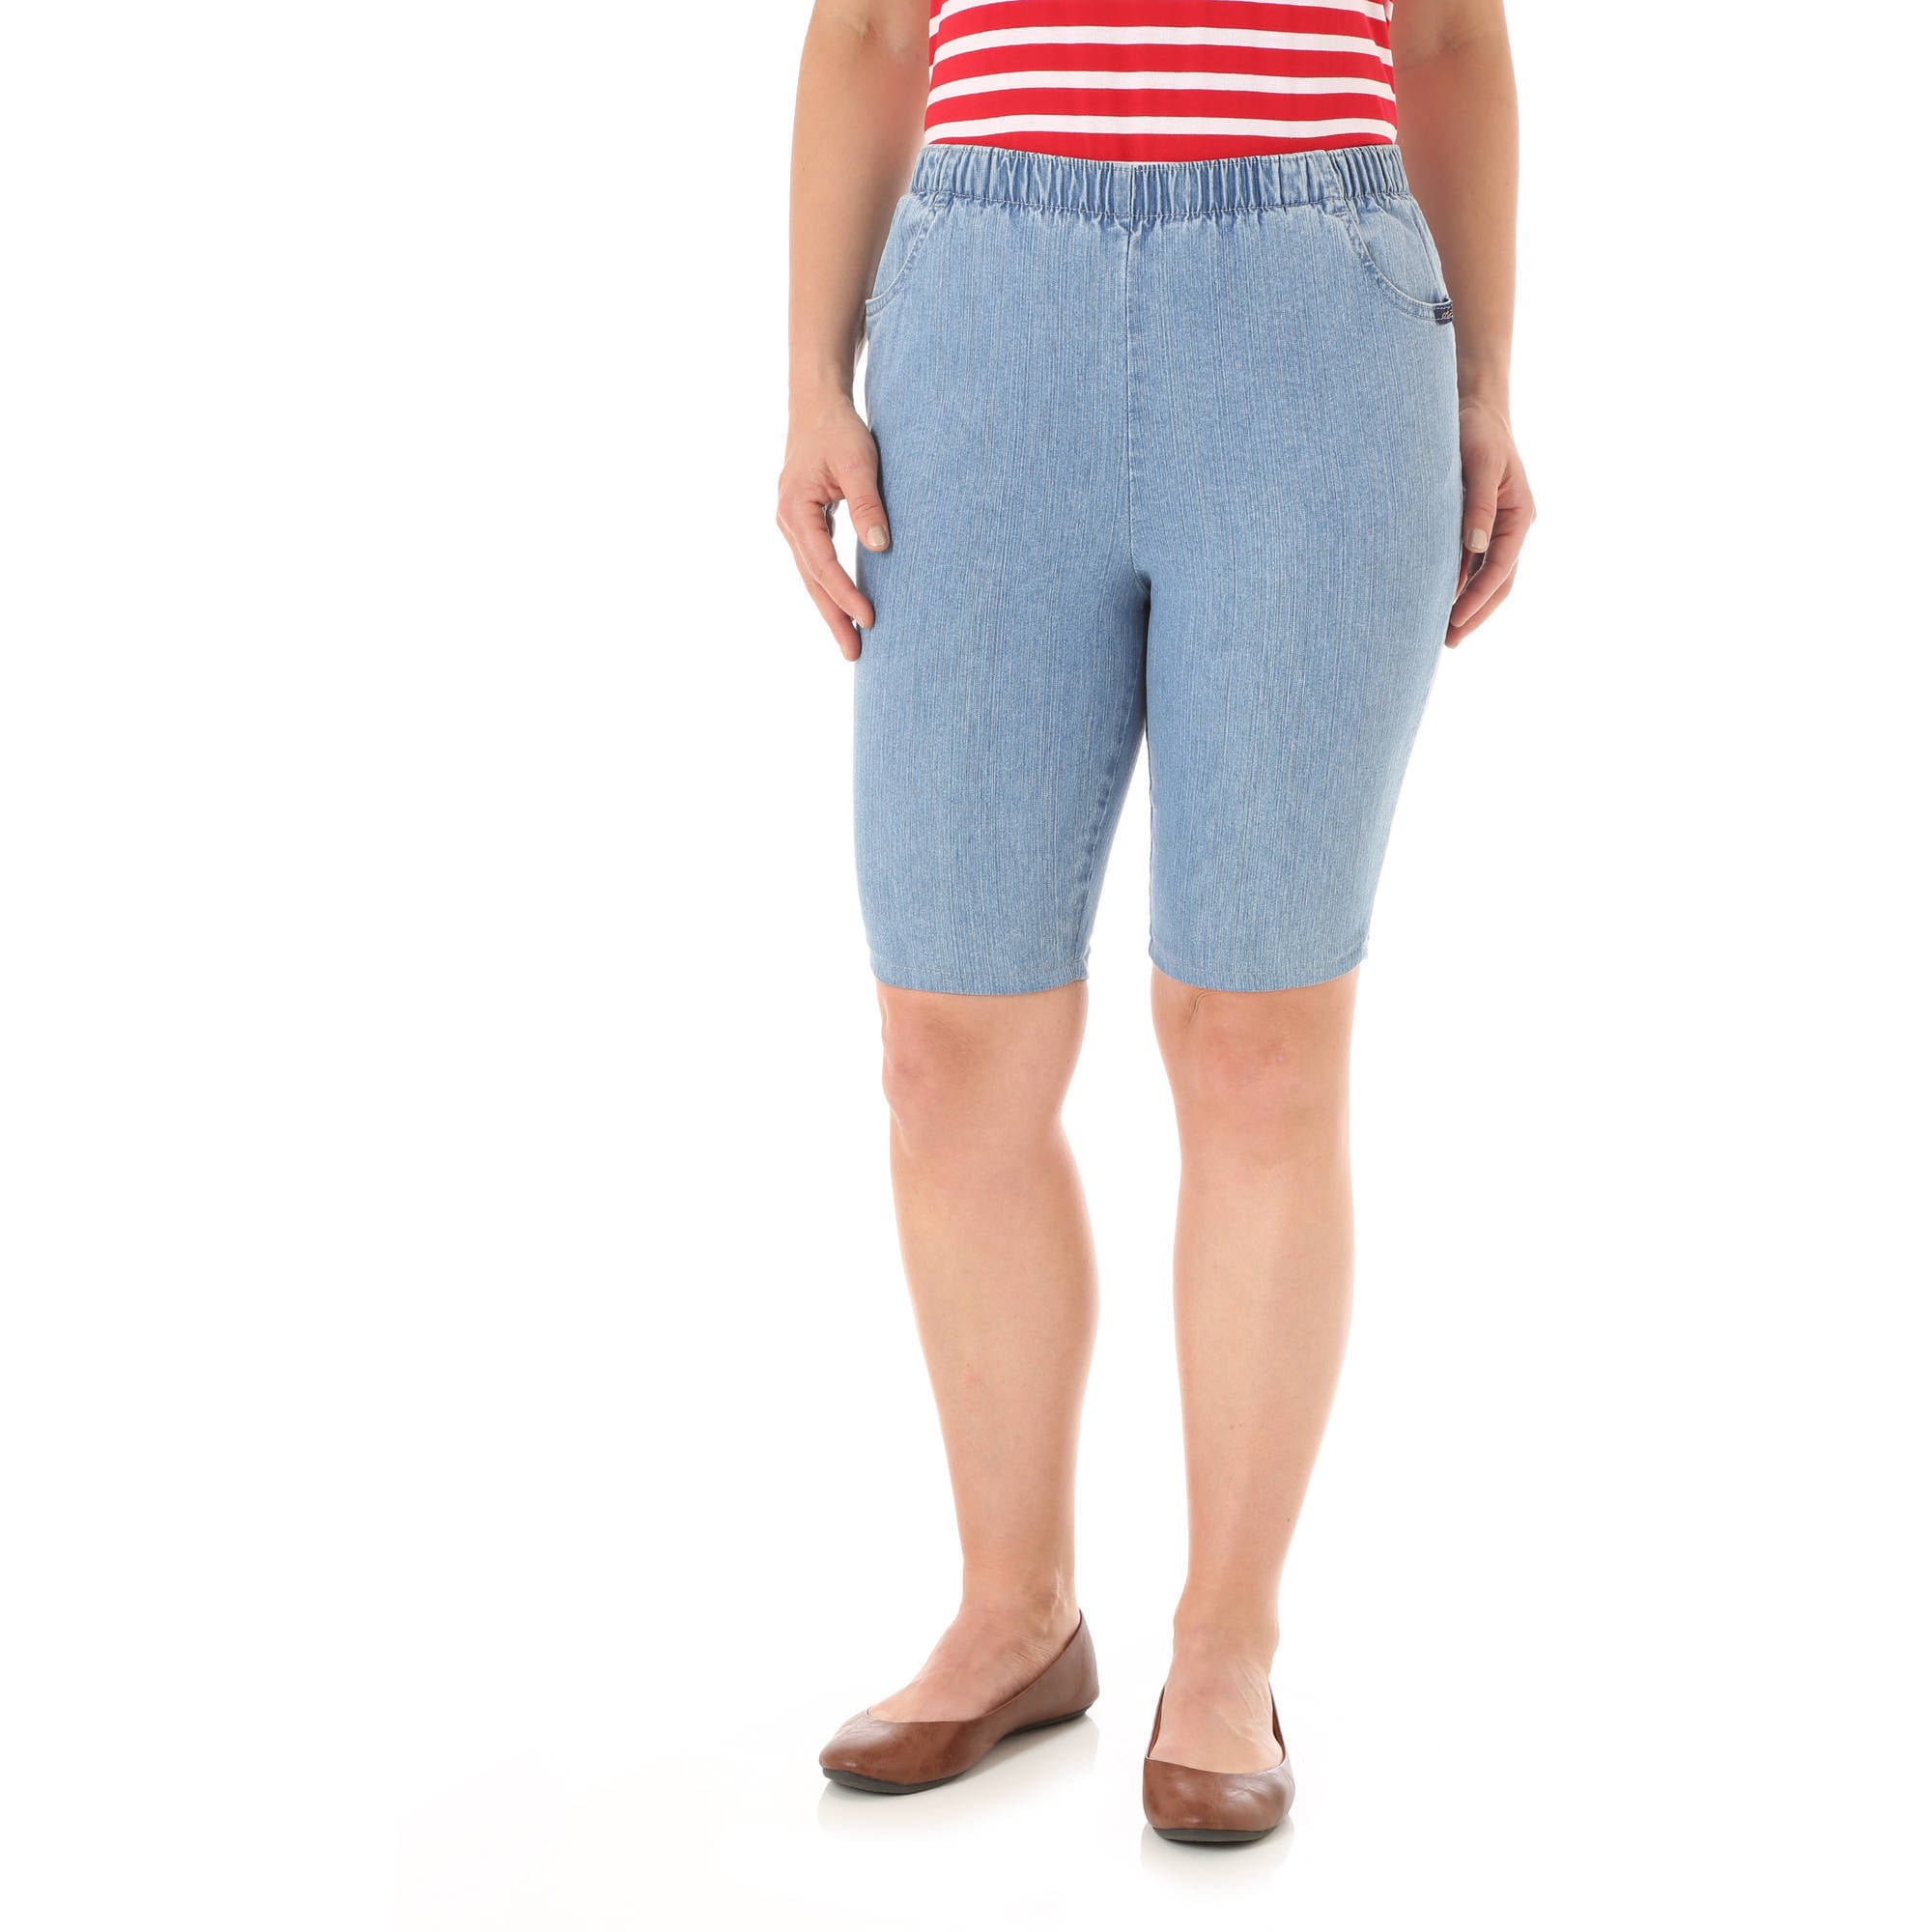 Women's Pull-On Shorts with Elastic Waistband - Walmart.com